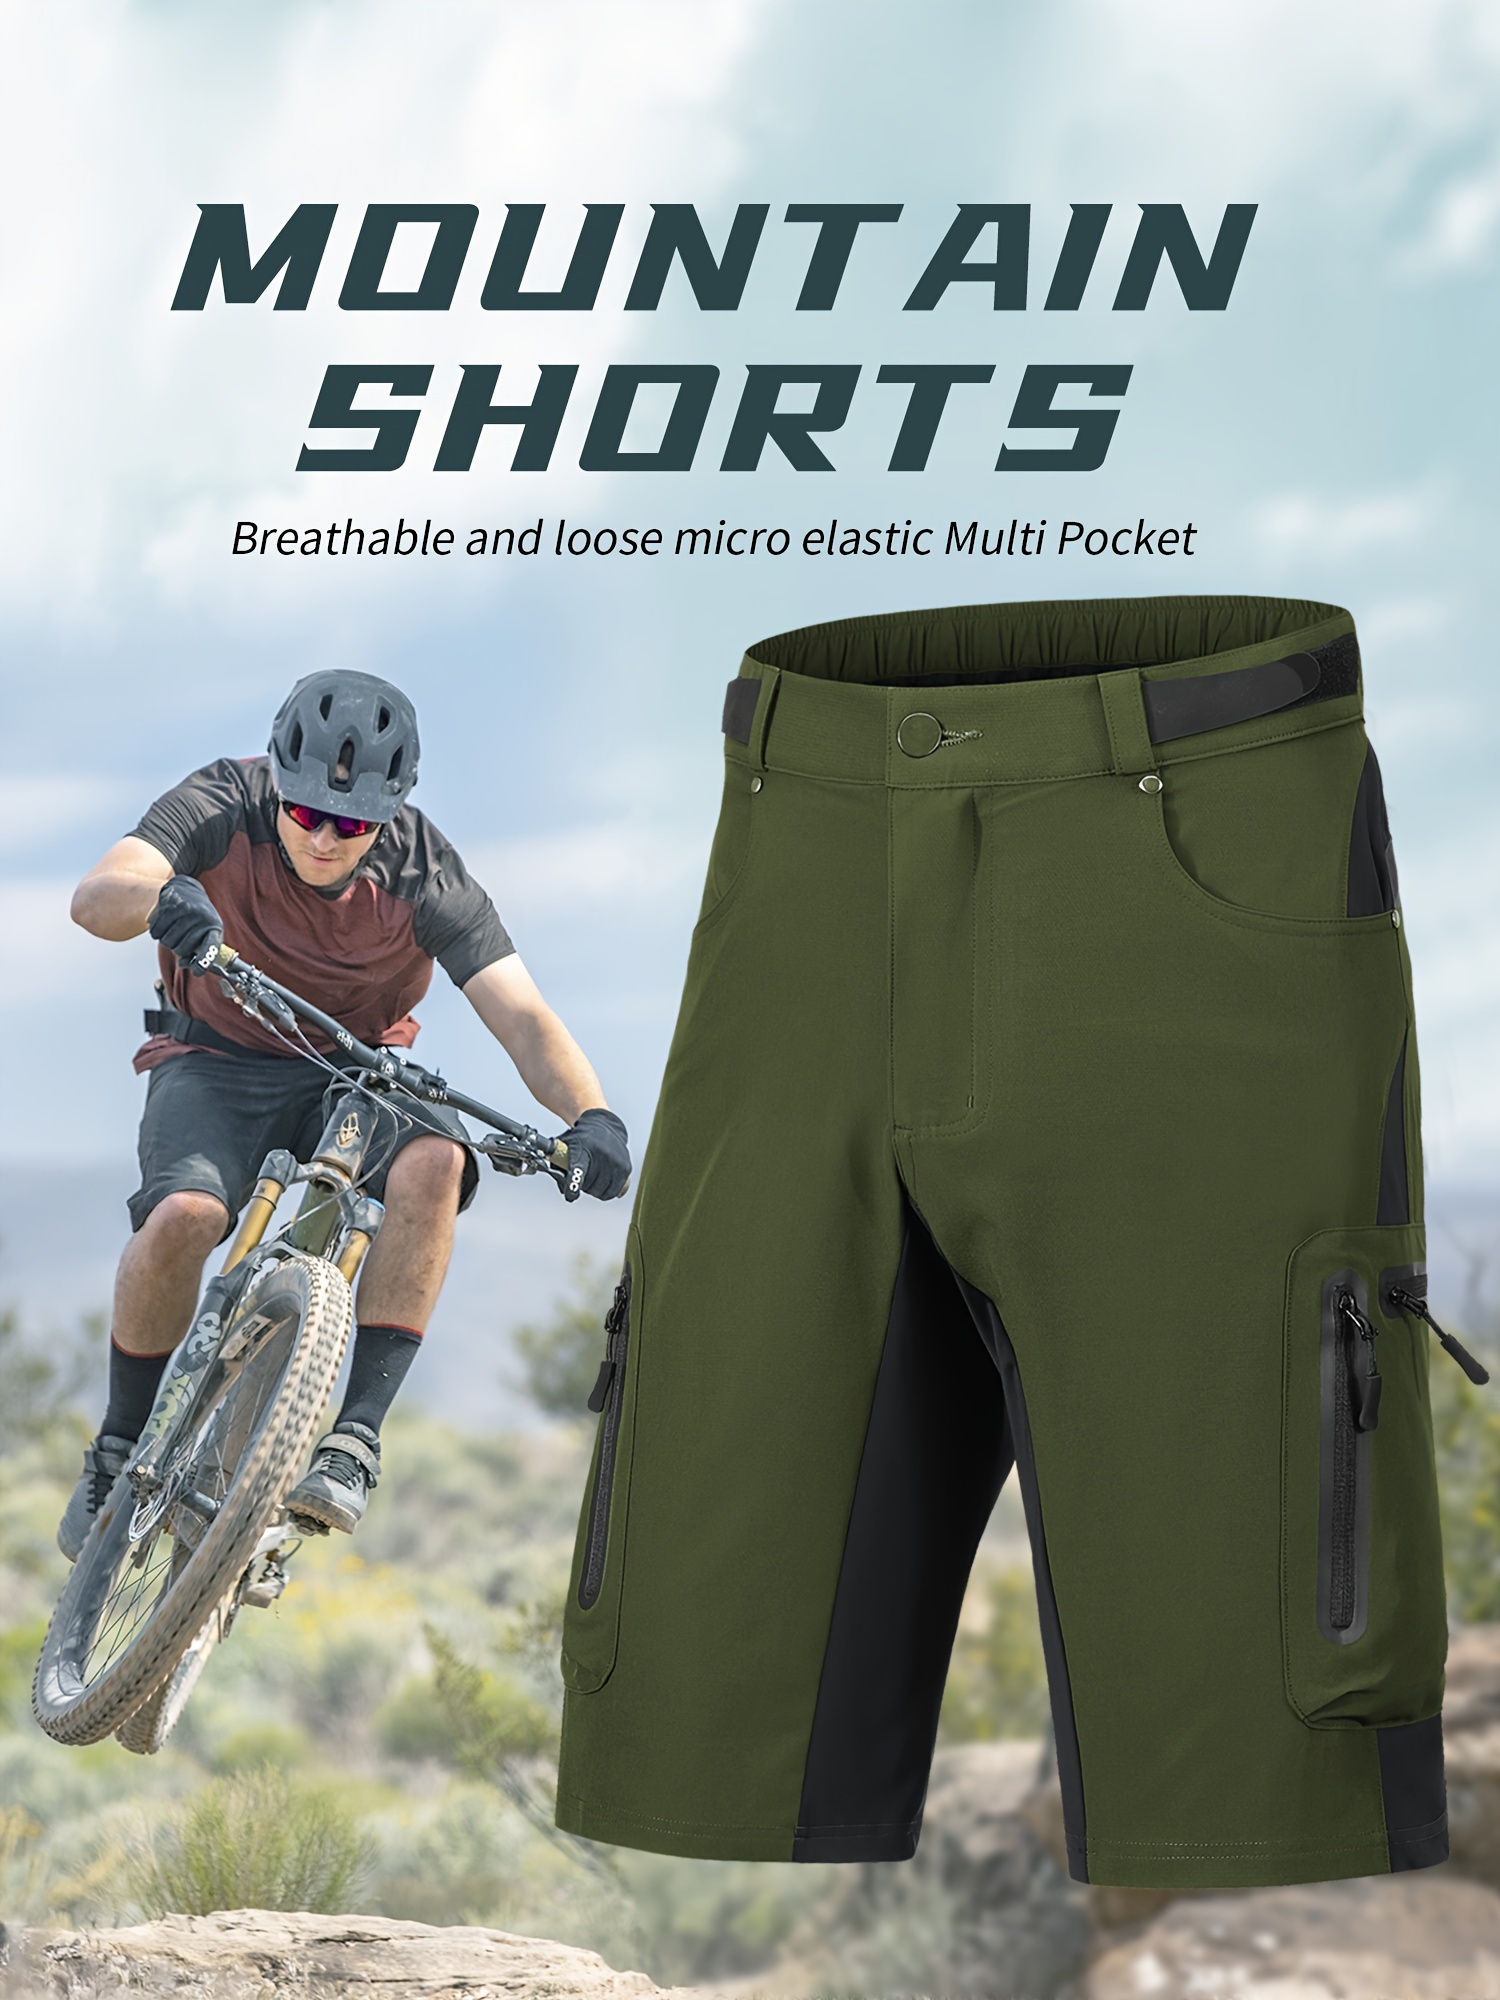 Pantalones de senderismo para hombre, talla grande, pantalones deportivos  para exteriores, ligeros, impermeables, para pesca, montaña, bolsillos con